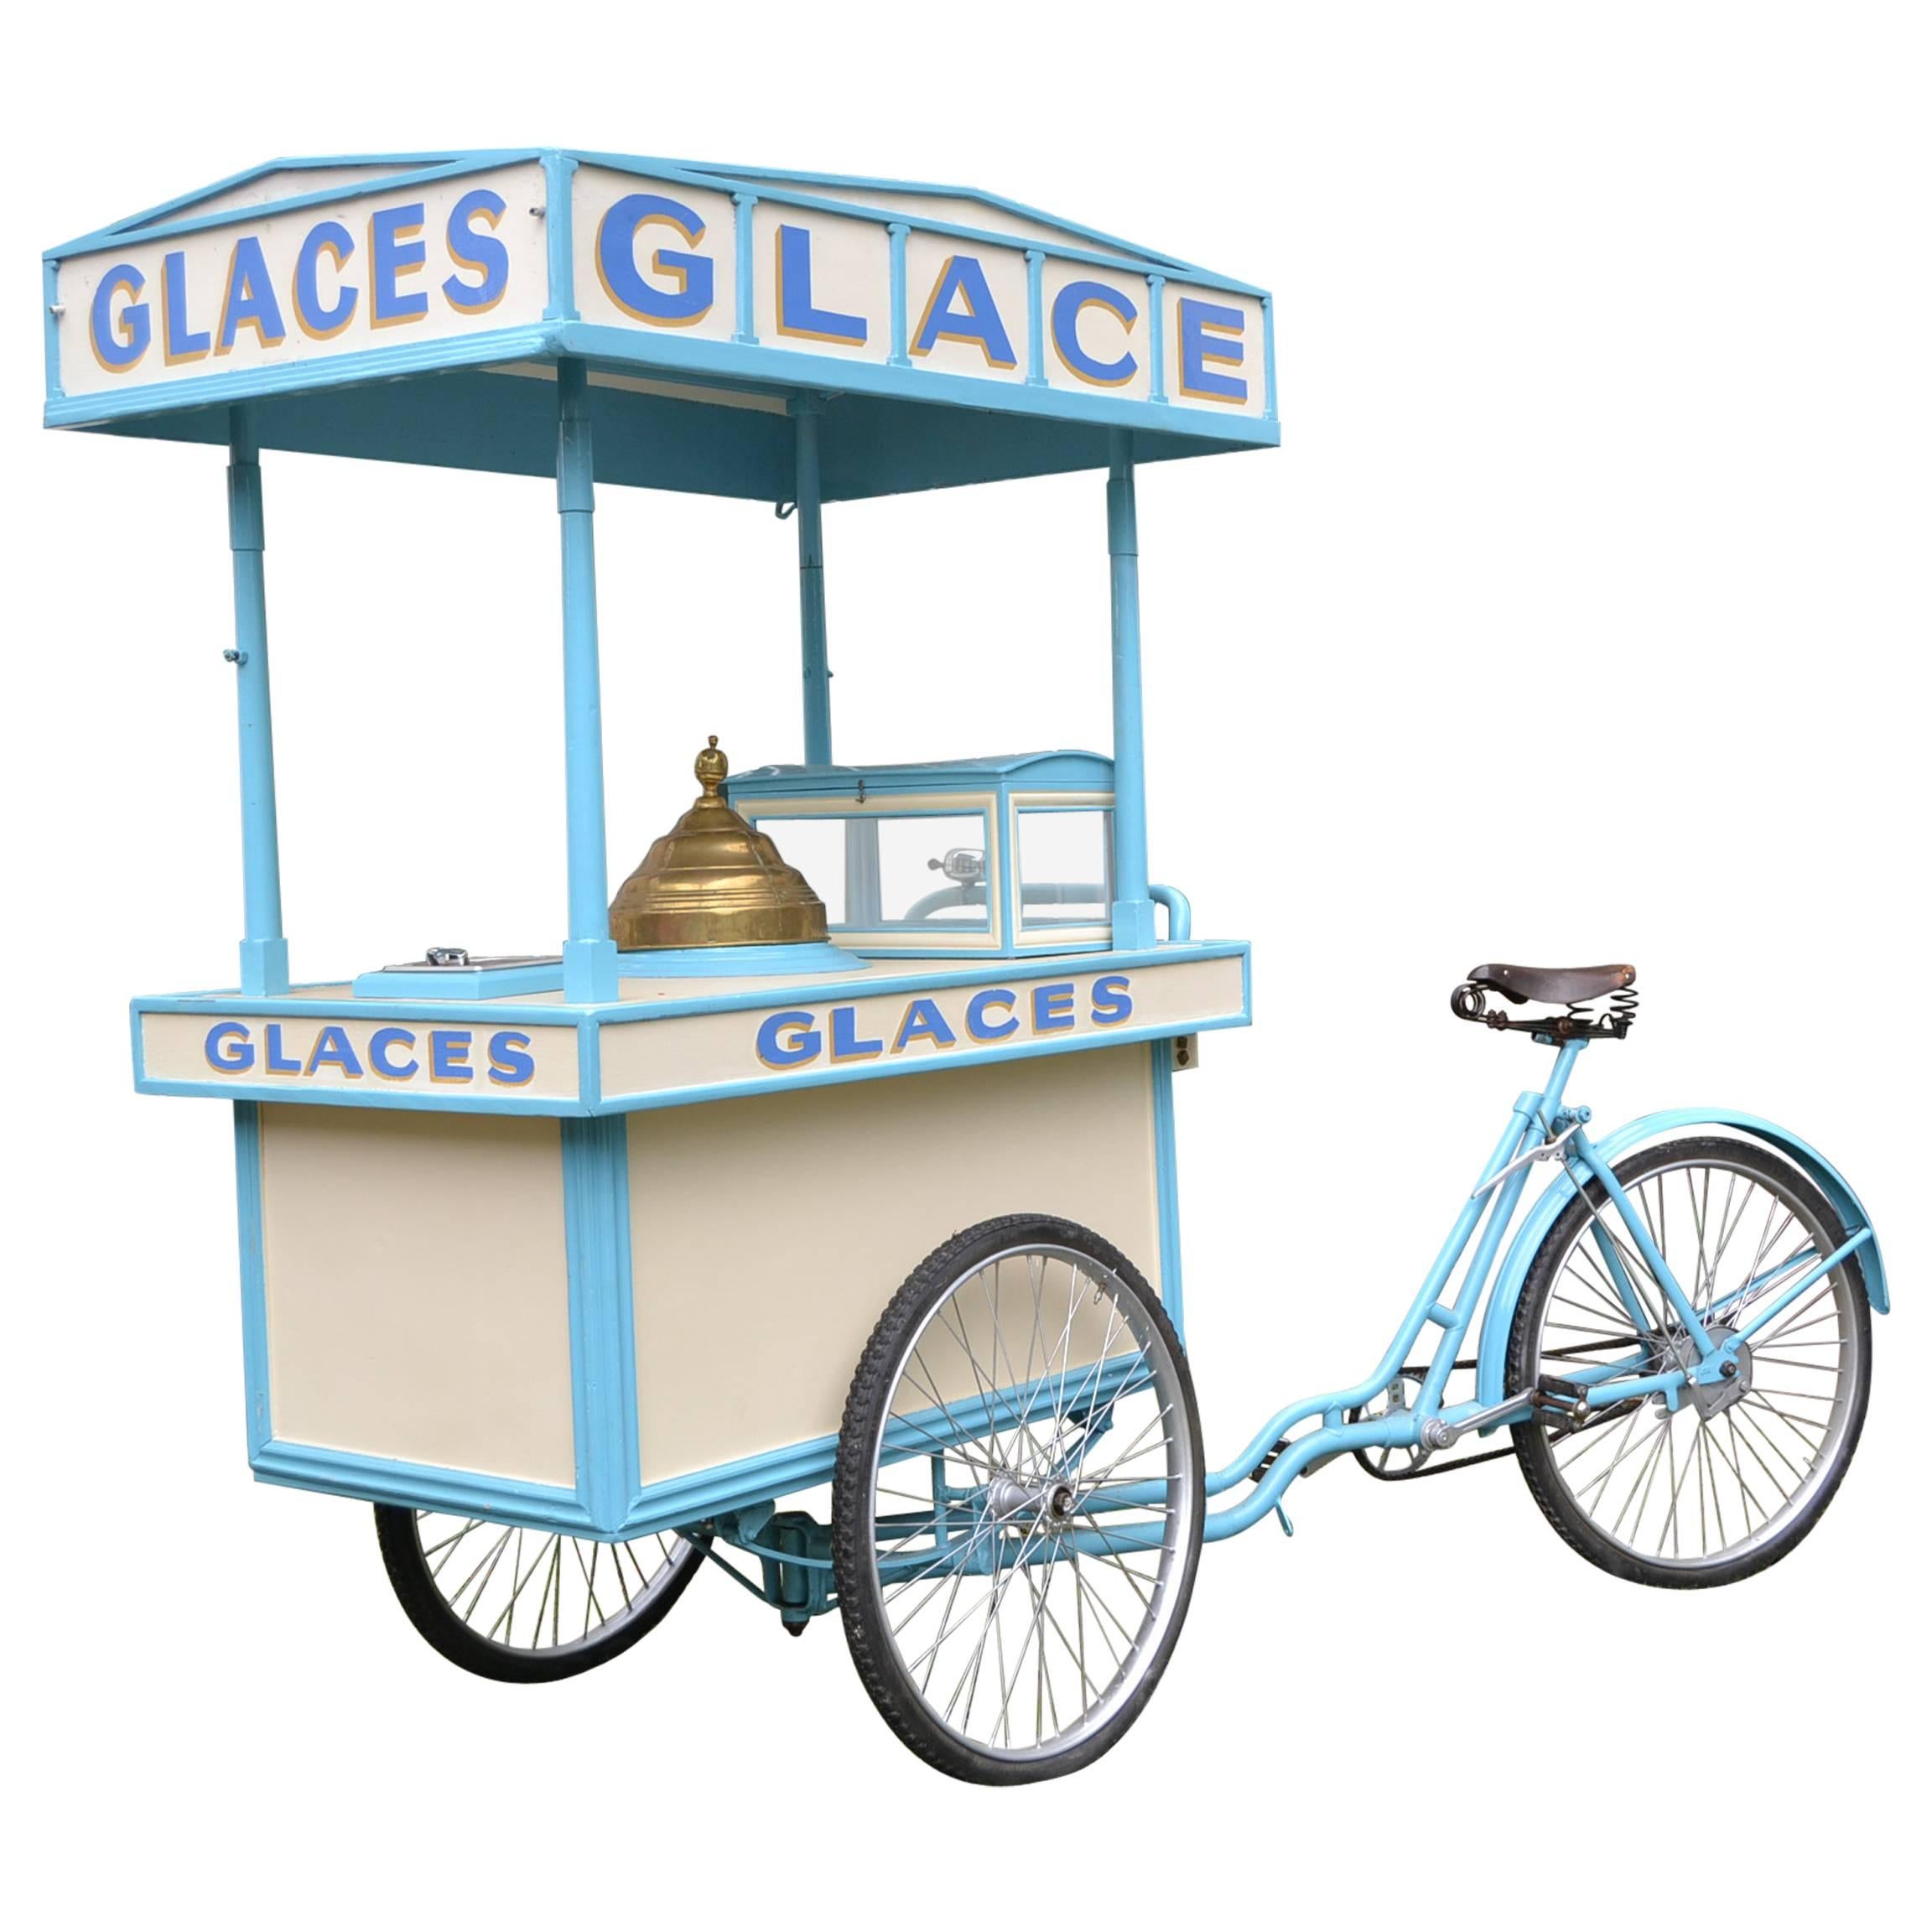 Nostalgic Ice Cream Bike from the 1930s